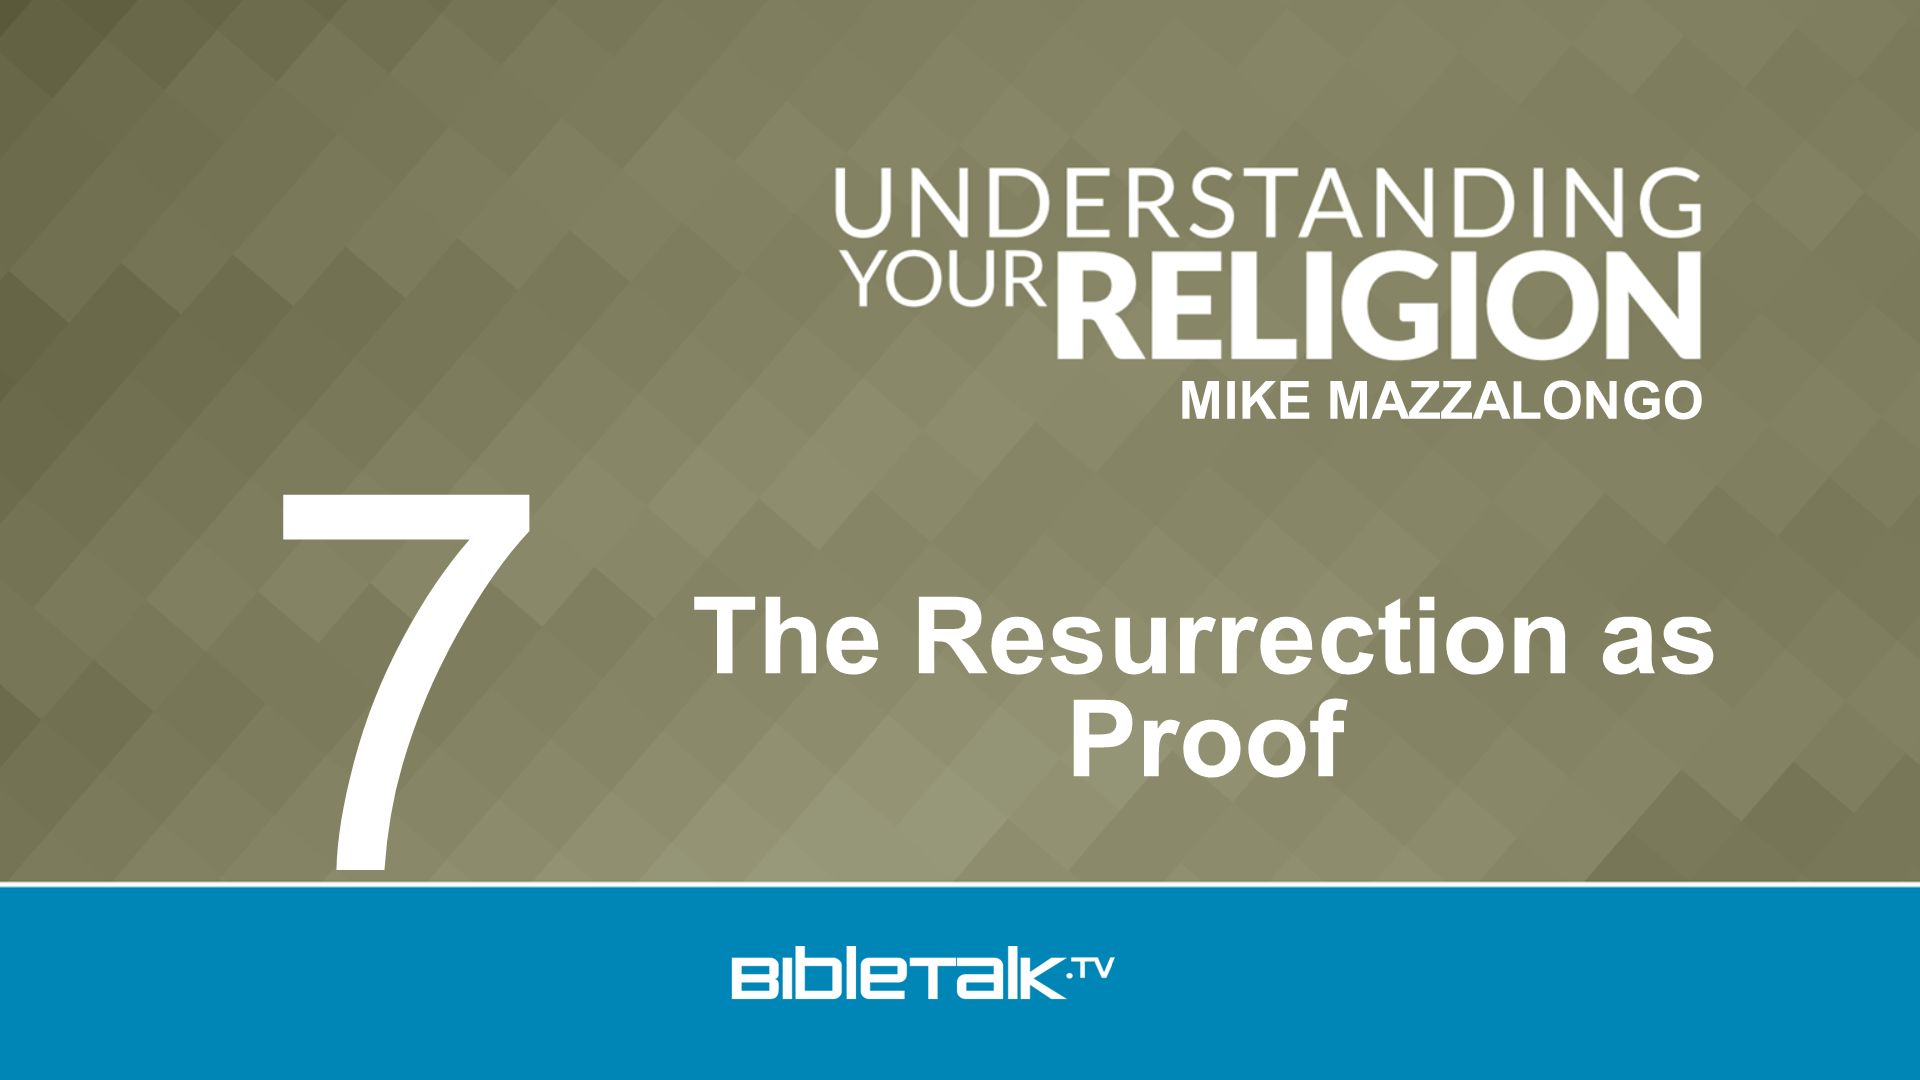 MIKE MAZZALONGO The Resurrection as Proof 7